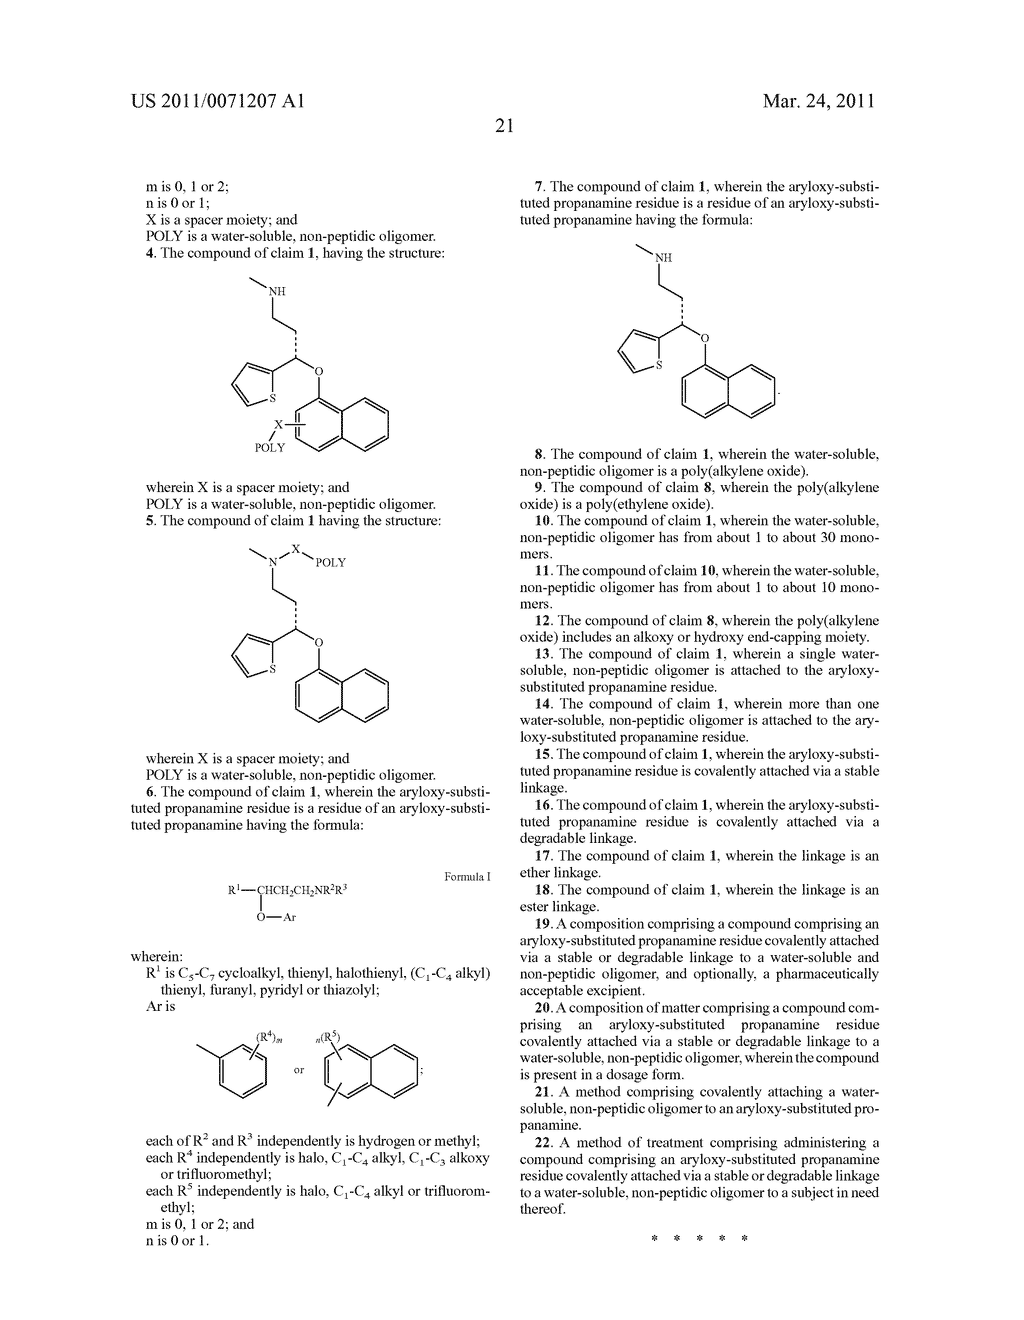 Oligomer-Aryloxy-Substituted Propanamine Conjugates - diagram, schematic, and image 22